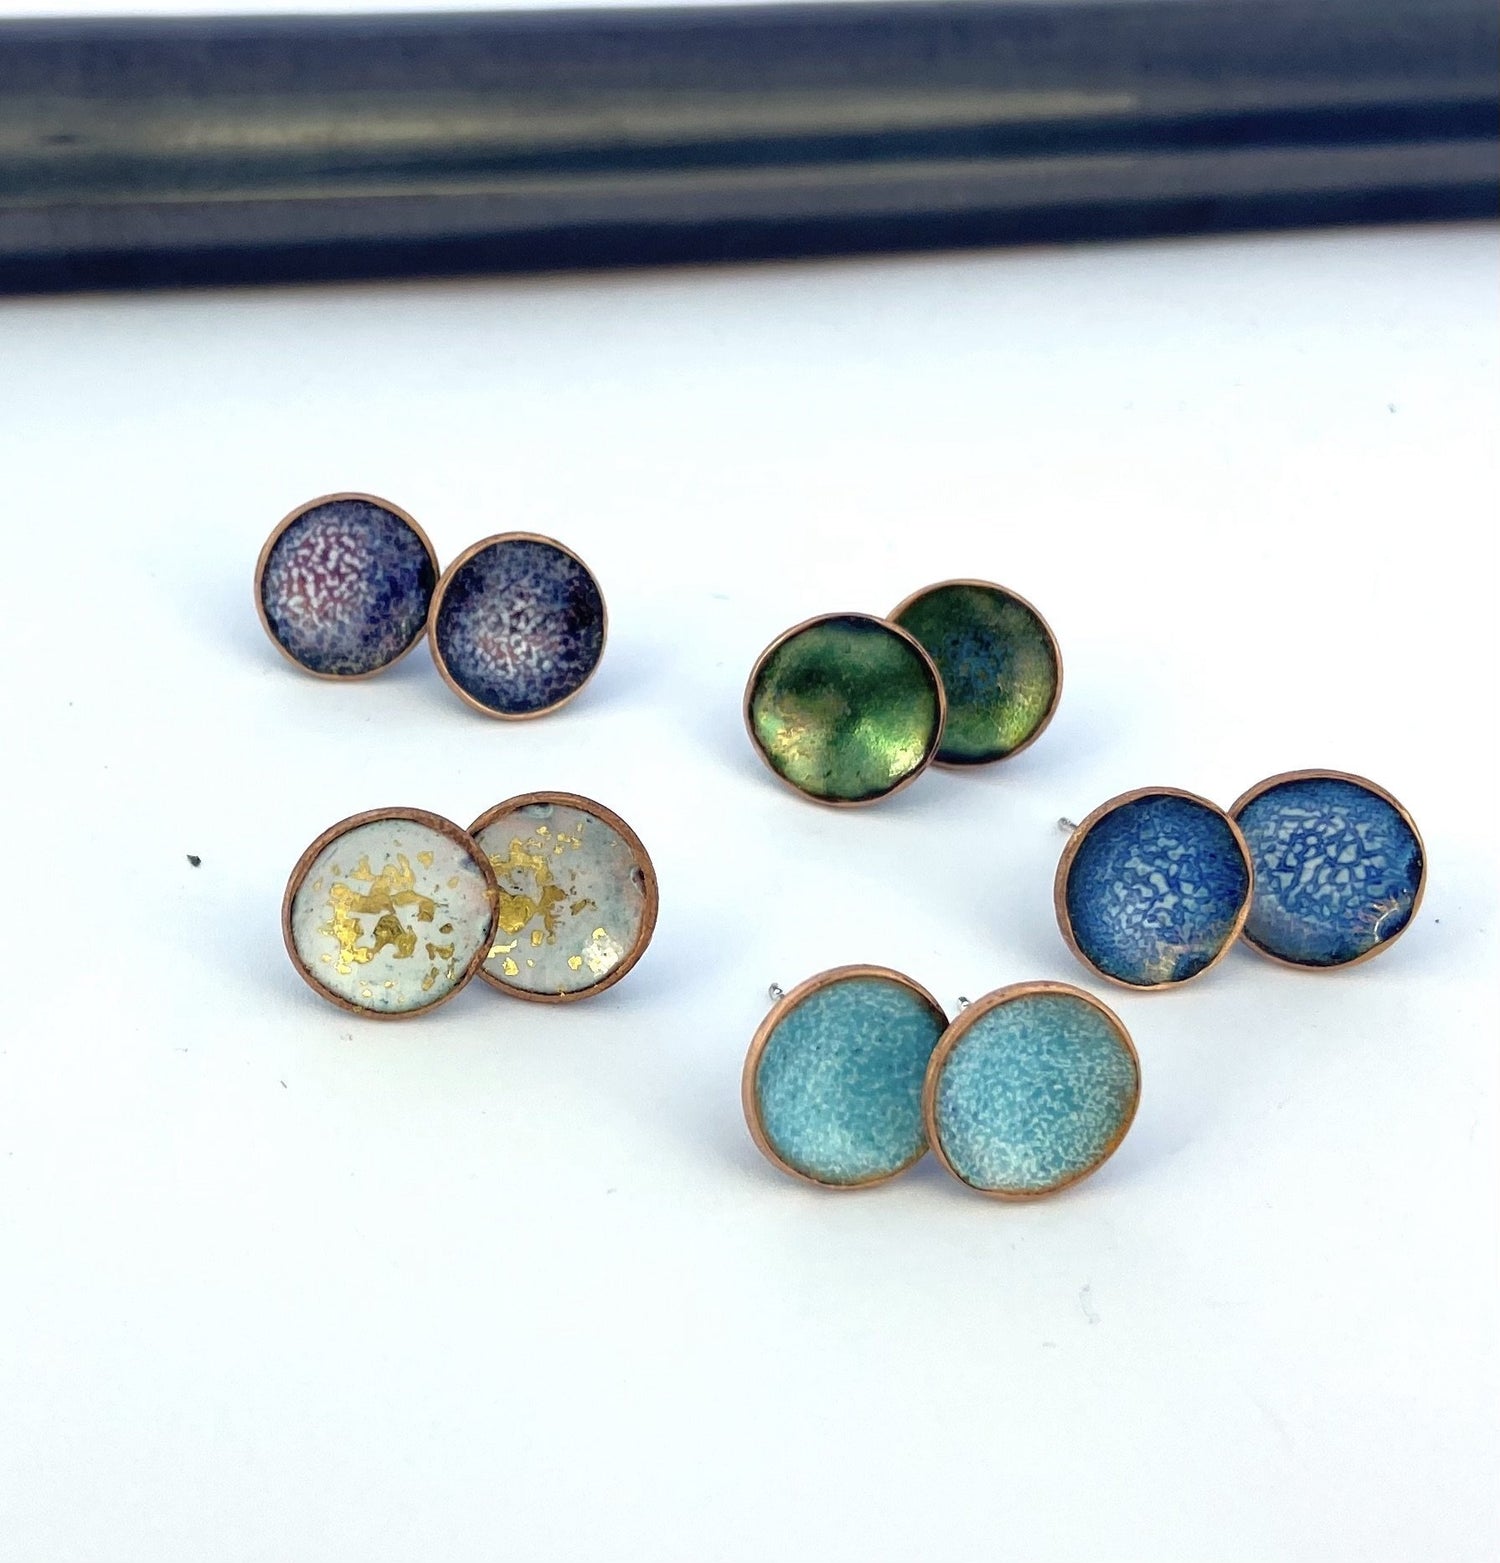 Expansion Enamel studs ‘Bowl’ earrings - blue - Katie Johnston Jewellery